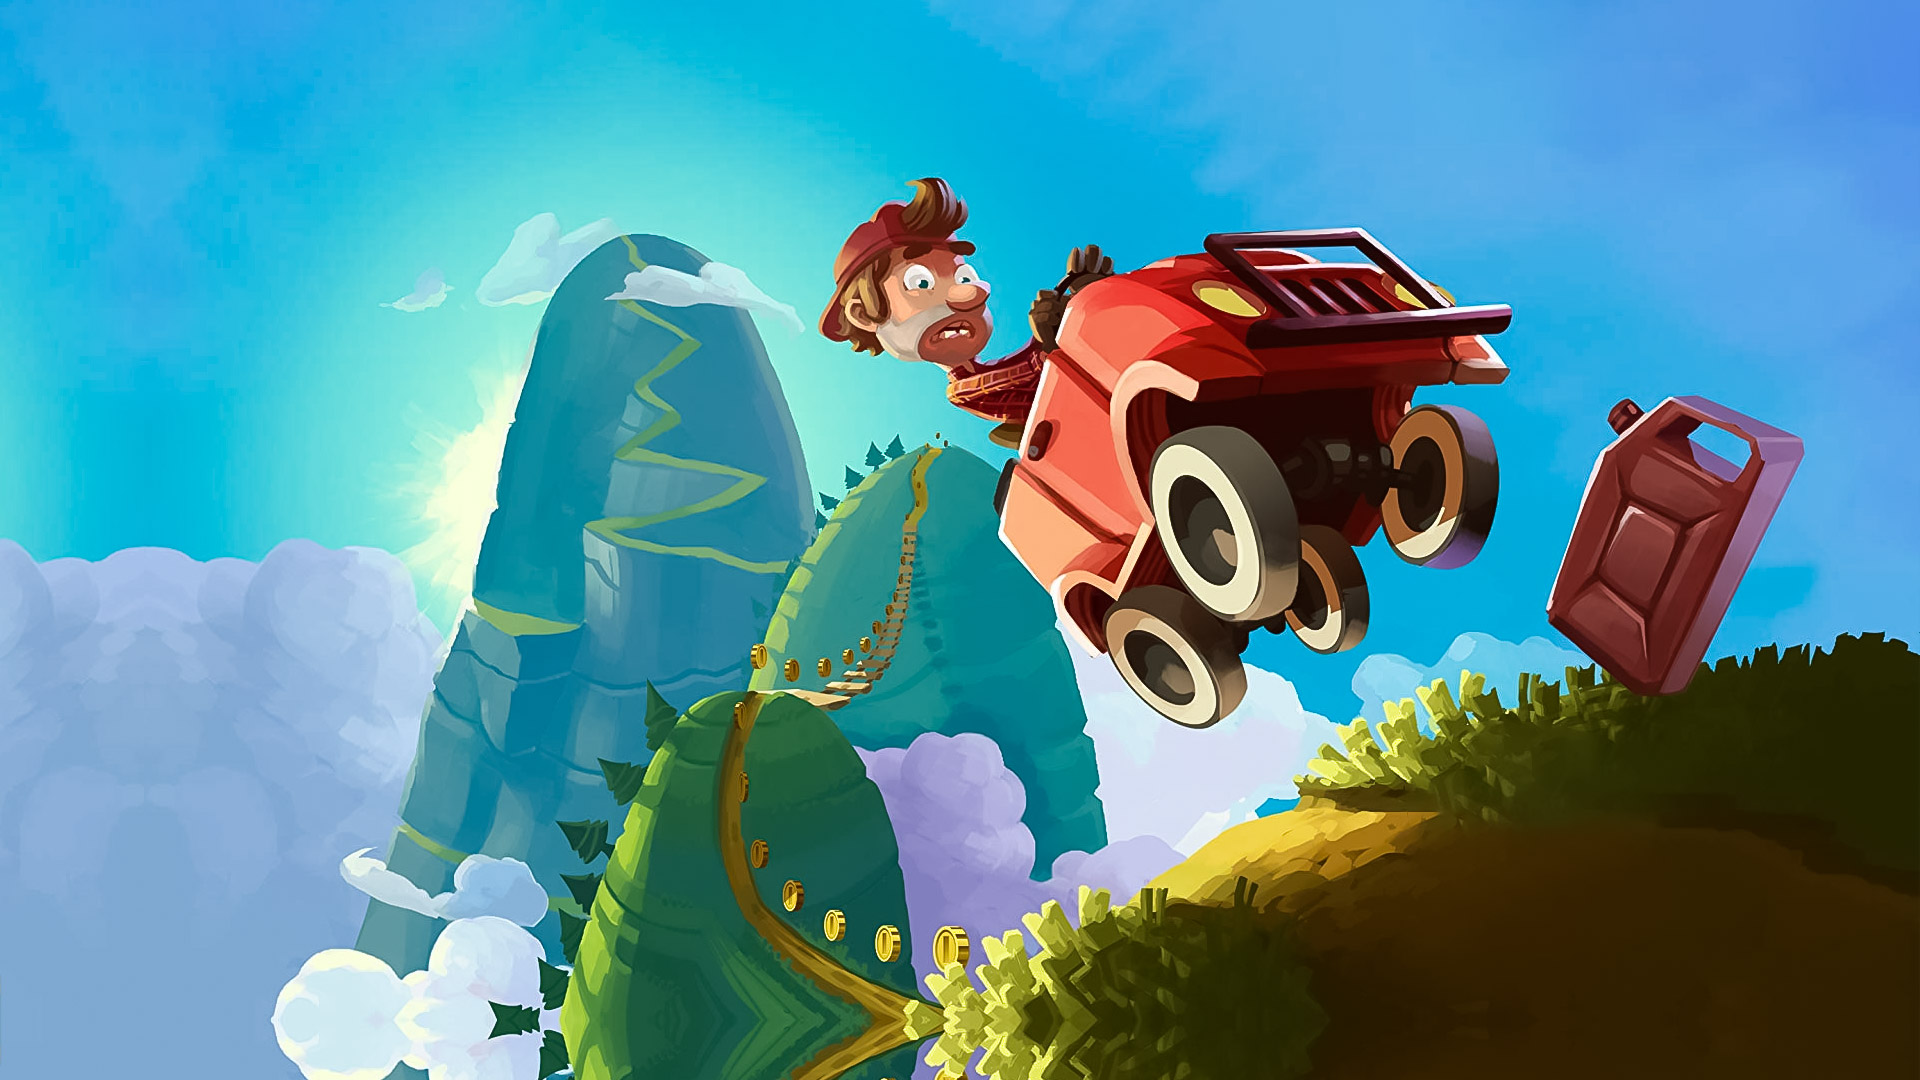 Download and play Hill Climb Racing on PC & Mac (Emulator)